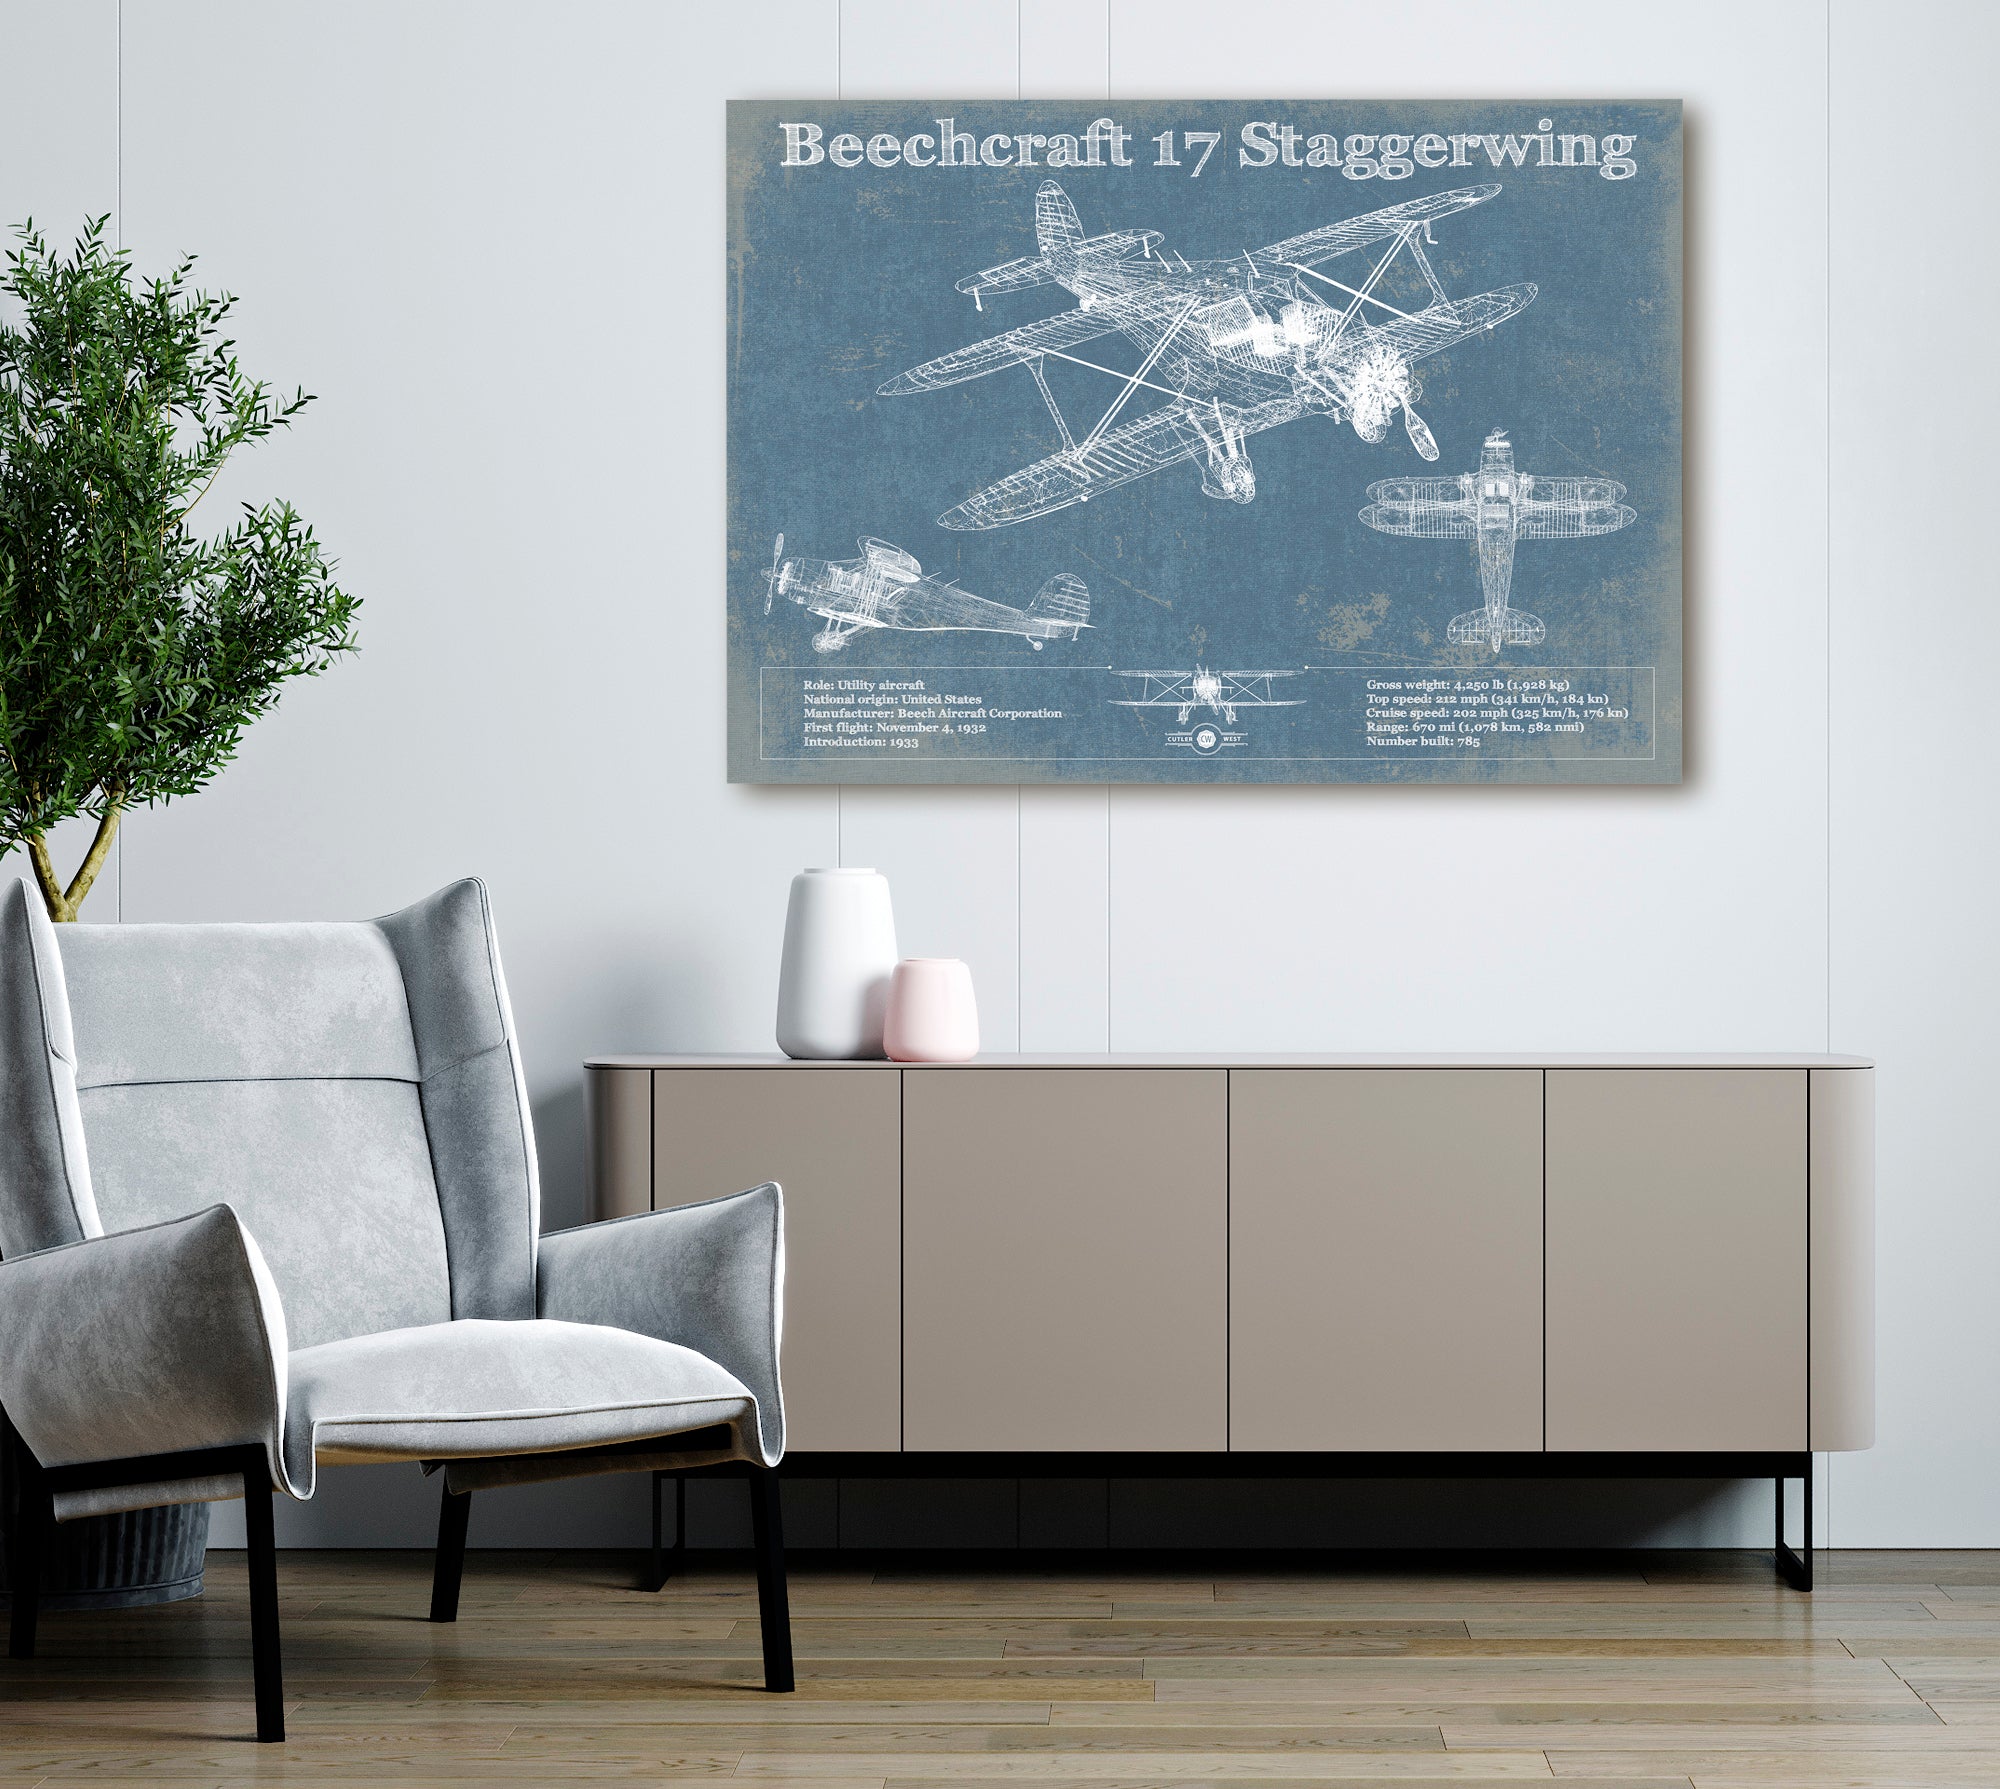 Beechcraft Model 17 Staggerwing Vintage Blueprint Airplane Print